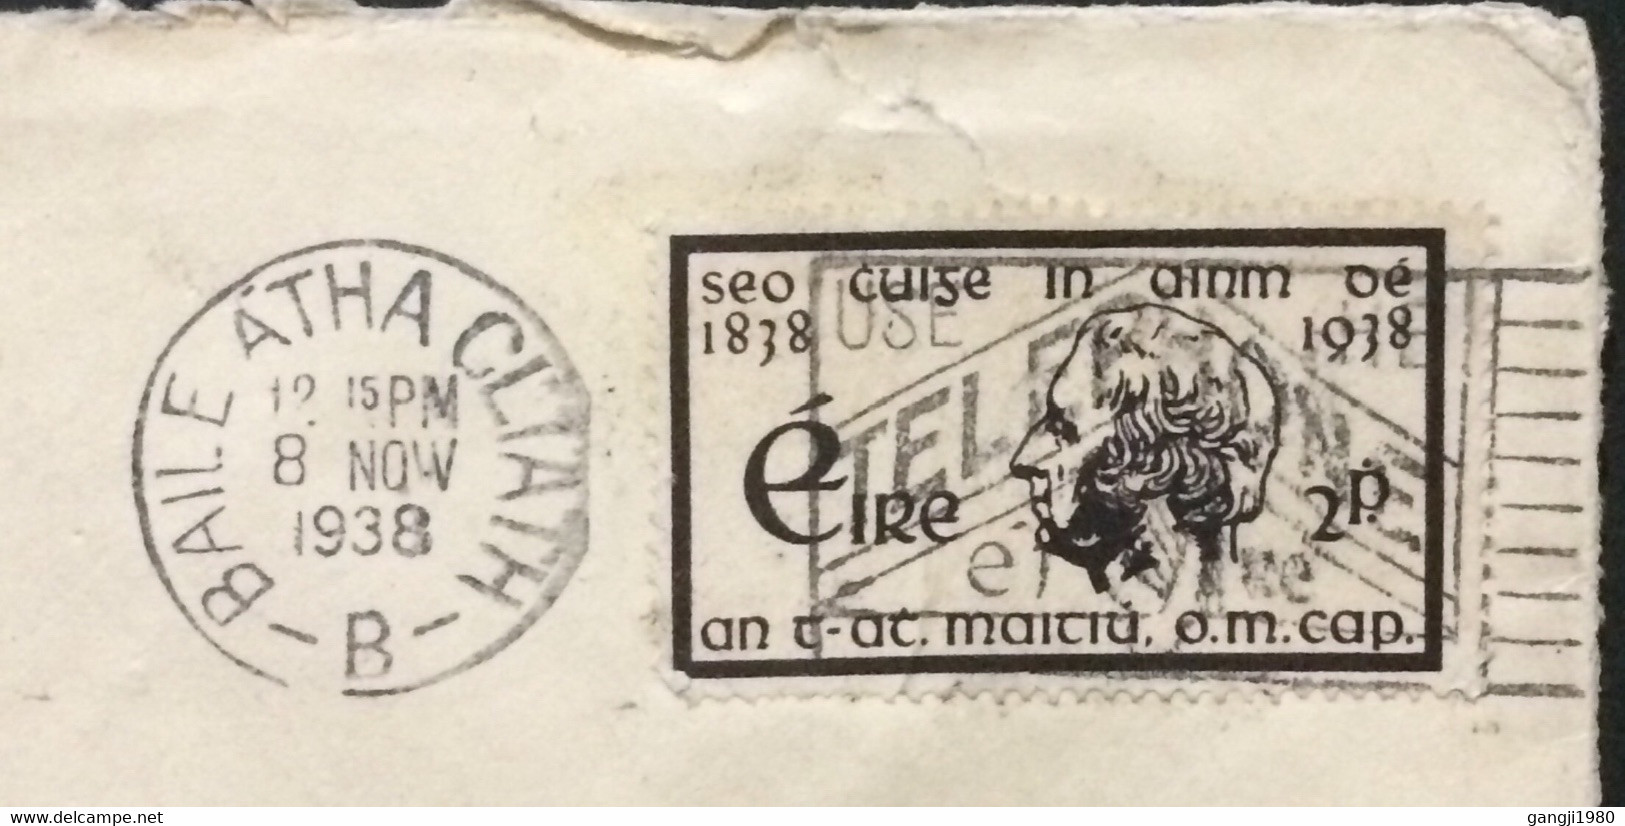 IRELAND 1938, COVER USED TO USA, ROMAN CATHOLIC, FATHER MATHEW STAMP, BAILE ATHA CLIATH CITY CANCEL, SLOGAN USE TELEPHON - Storia Postale